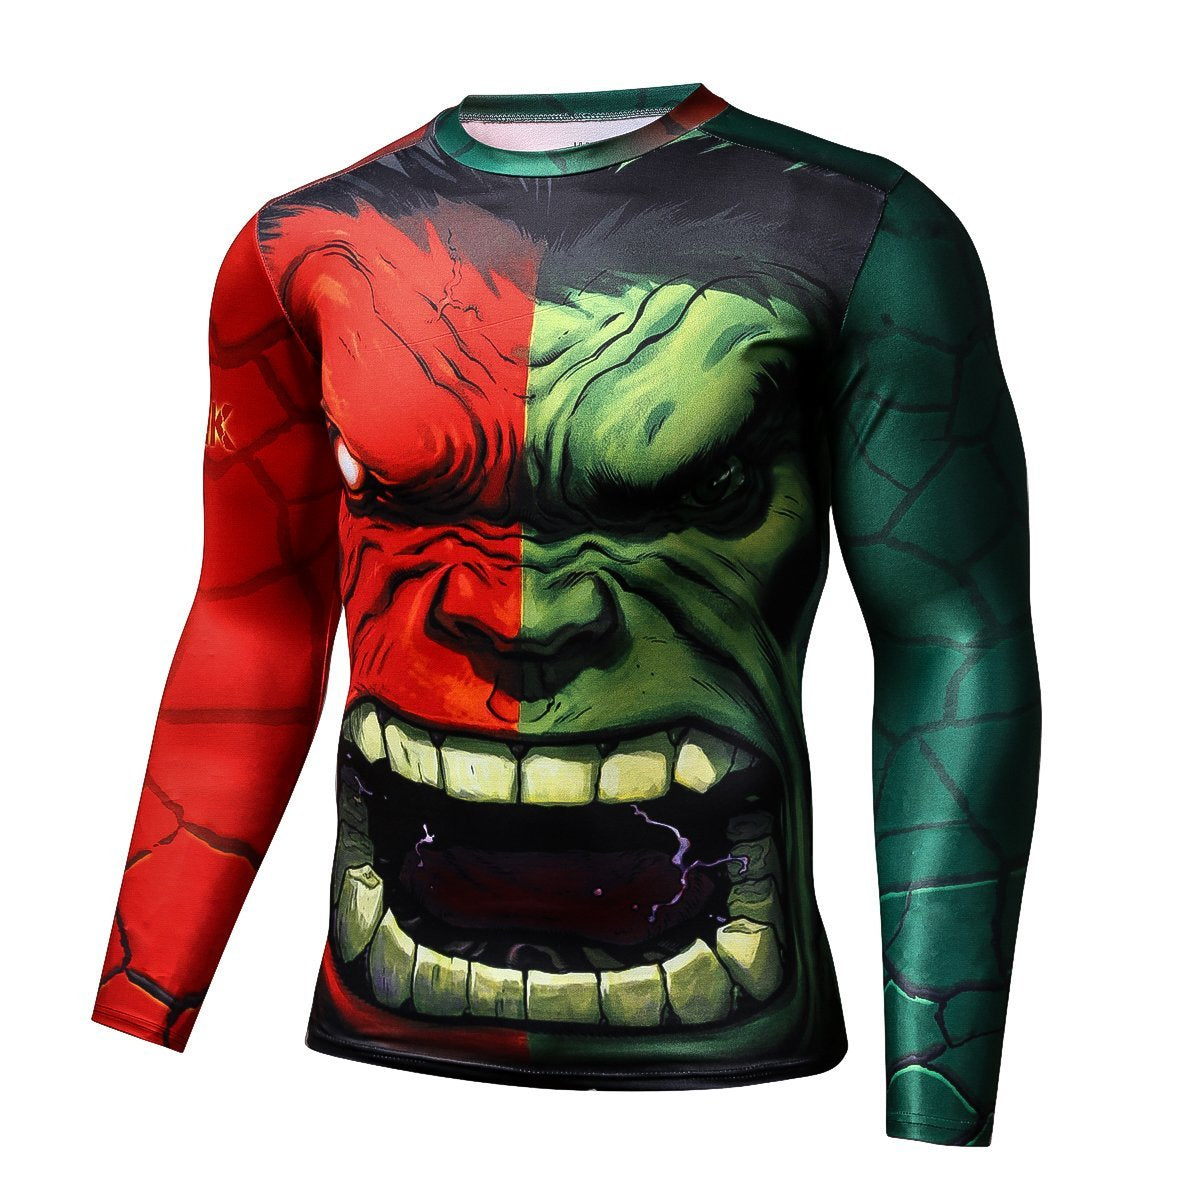 Hulk Cool Red And Green 3D Printed Hulk Long Sleeve Shirt